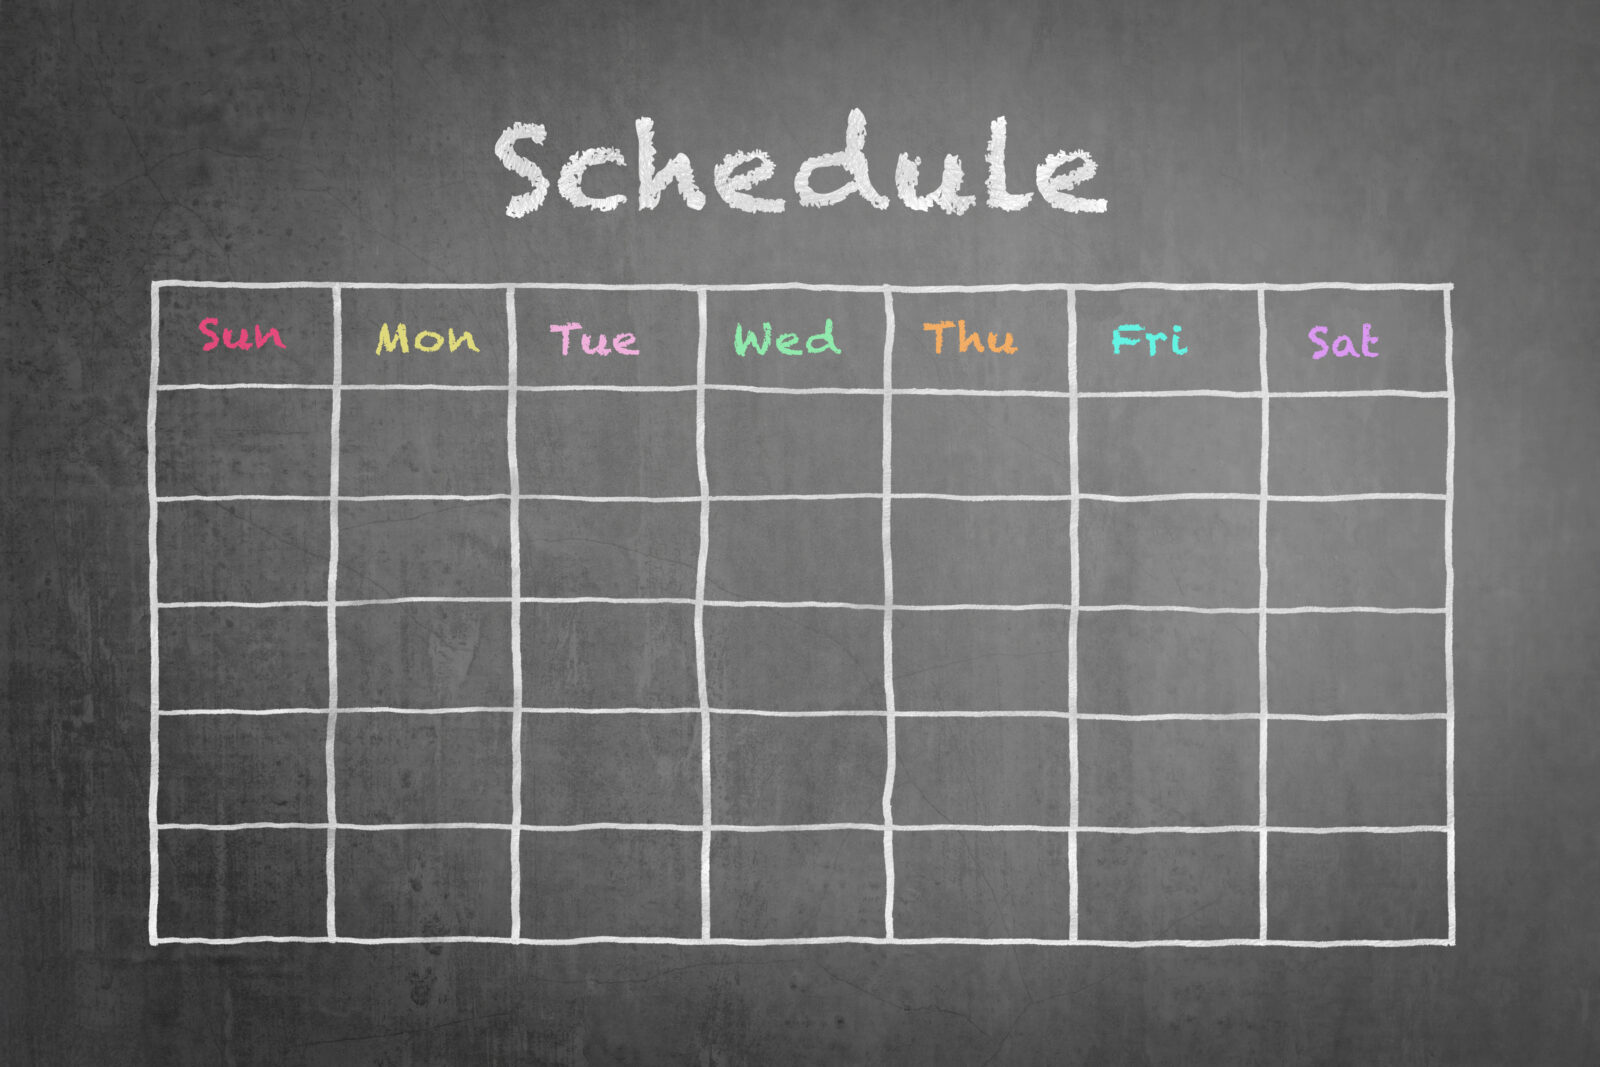 Sunday through Saturday grid schedule on a chalkboard